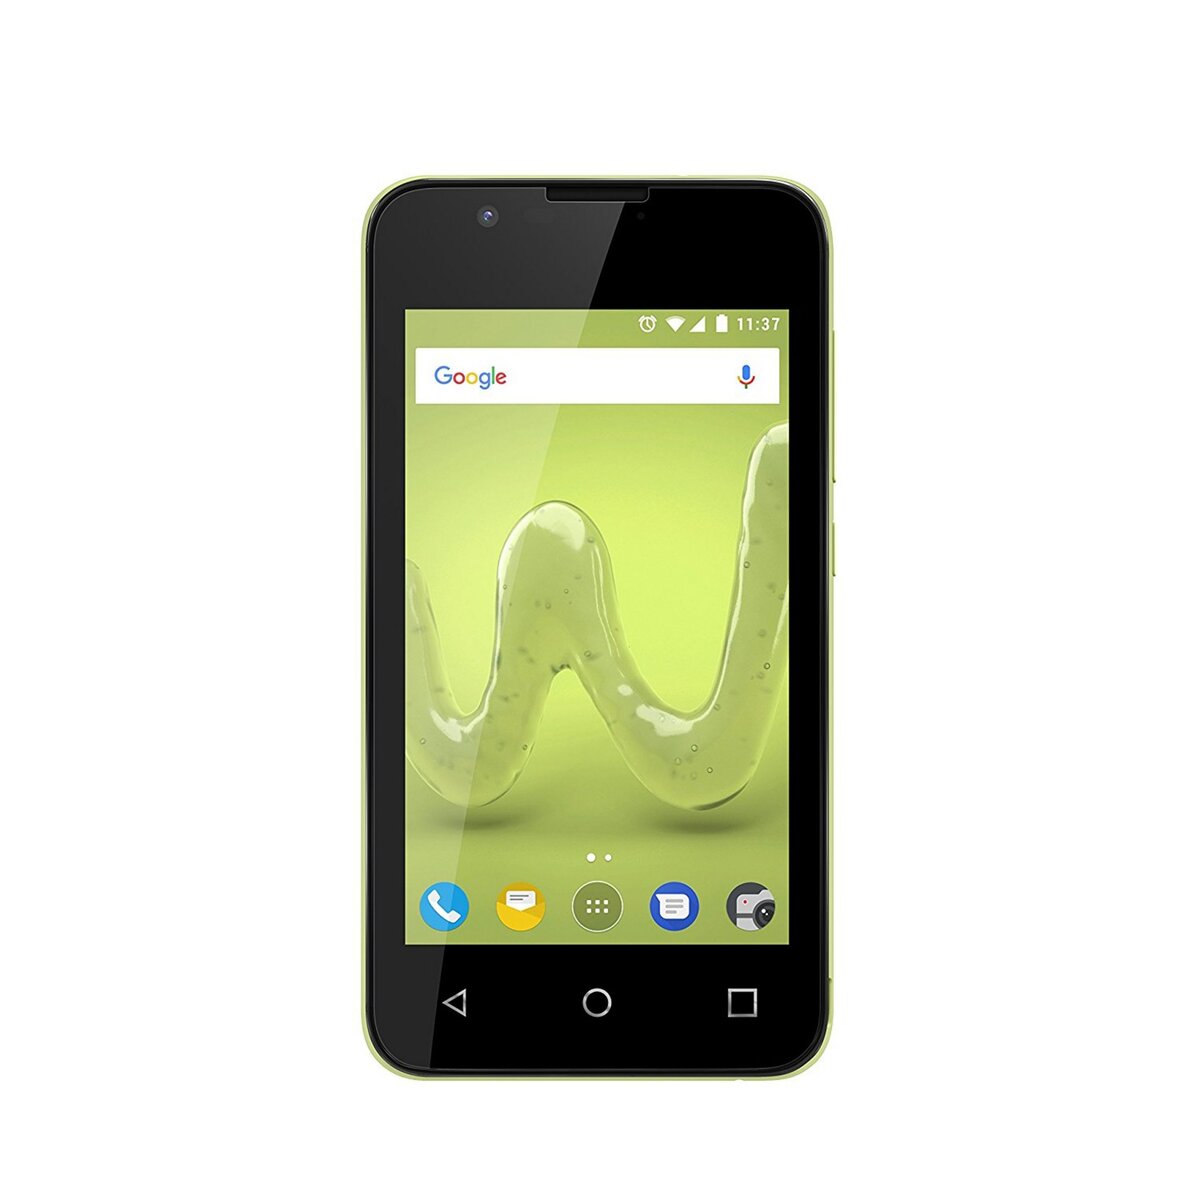 WIKO Smartphone SUNNY 2 - 8 Go - 4 pouces - Vert